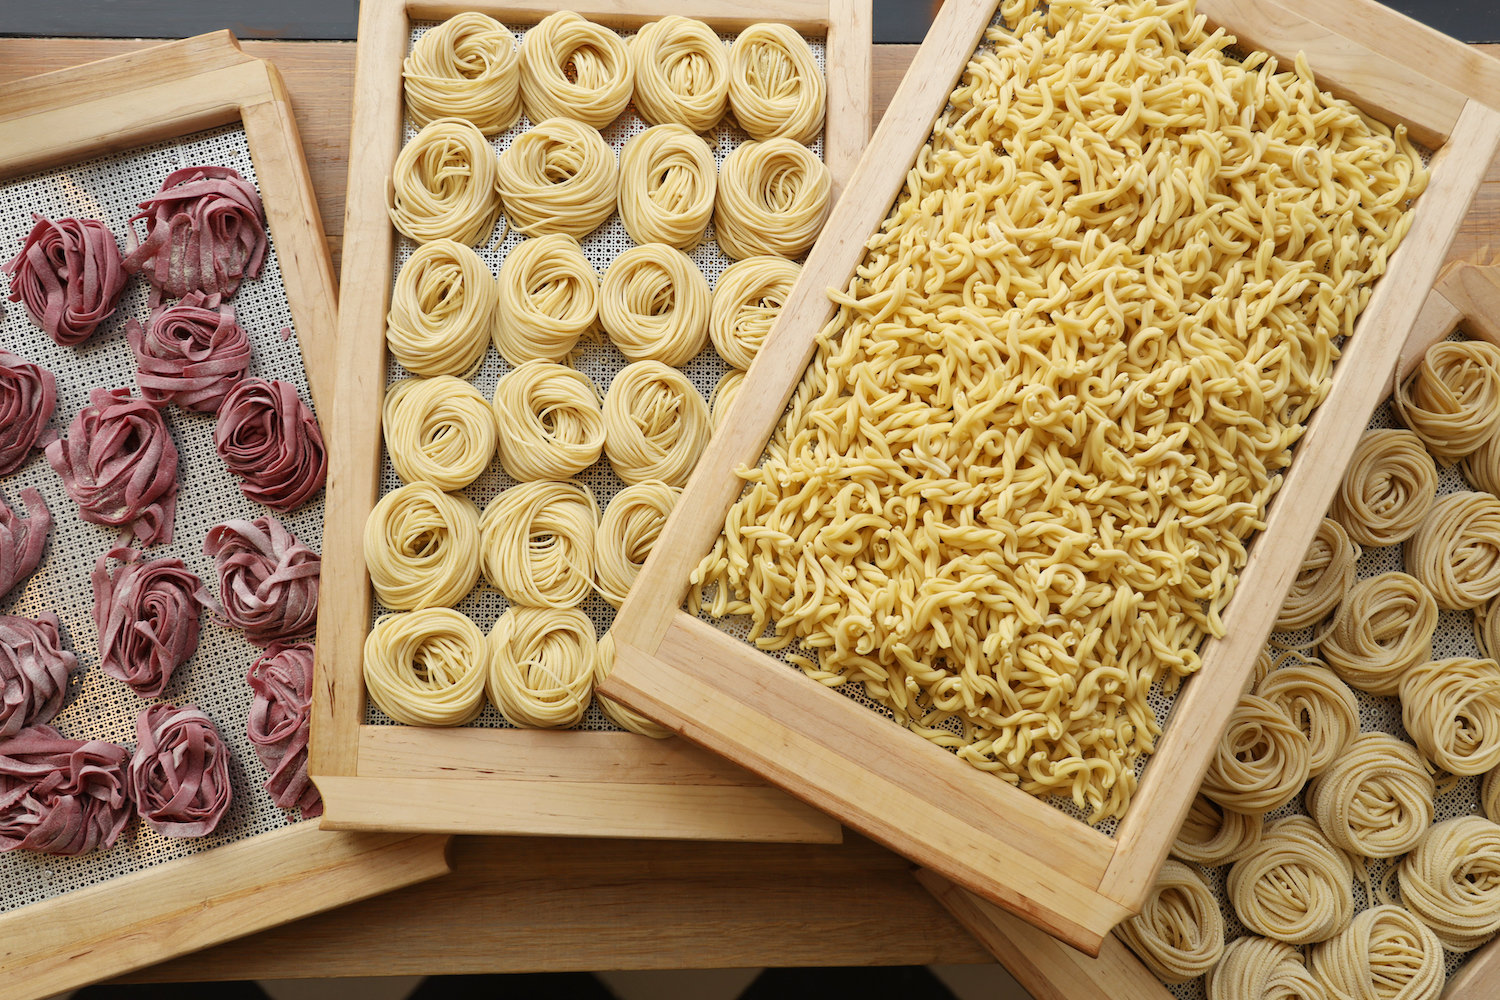 Freshly made pastas displayed on trays